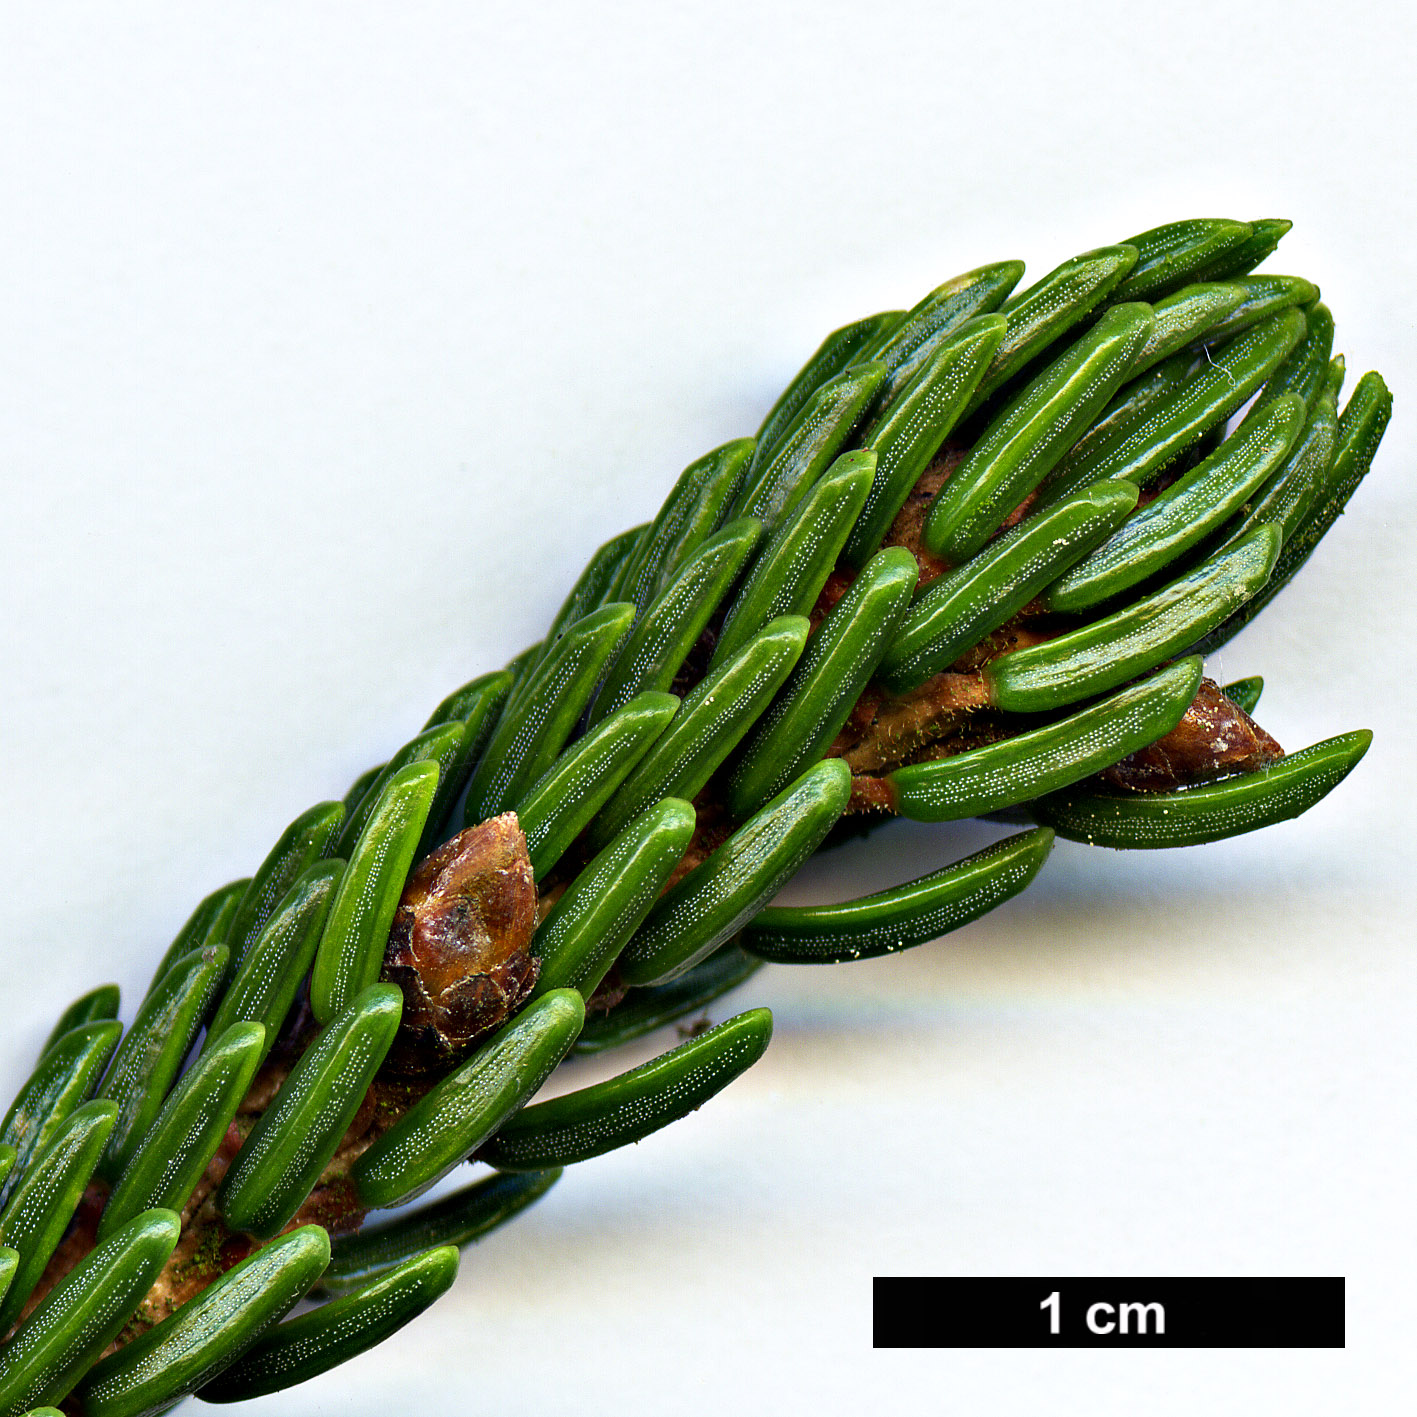 High resolution image: Family: Pinaceae - Genus: Picea - Taxon: orientalis